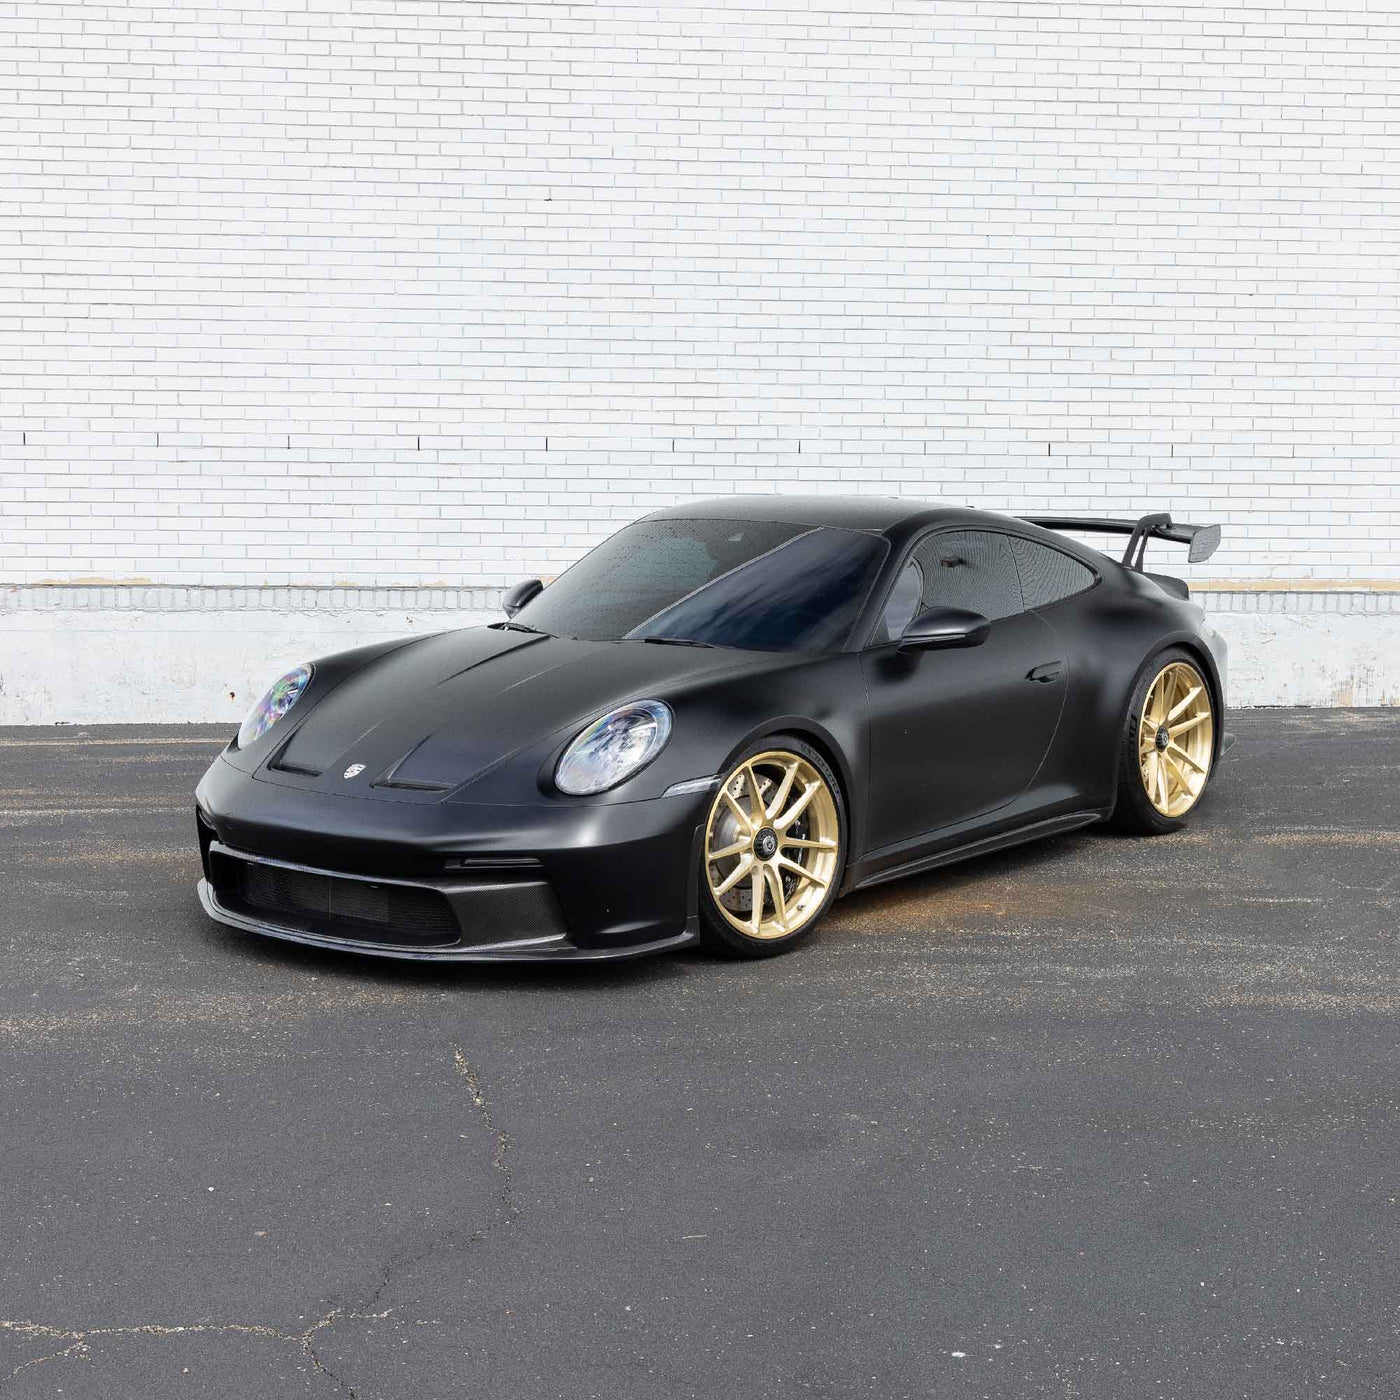 Front Splitter | Carbon Fiber | Fits Porsche 992 GT3